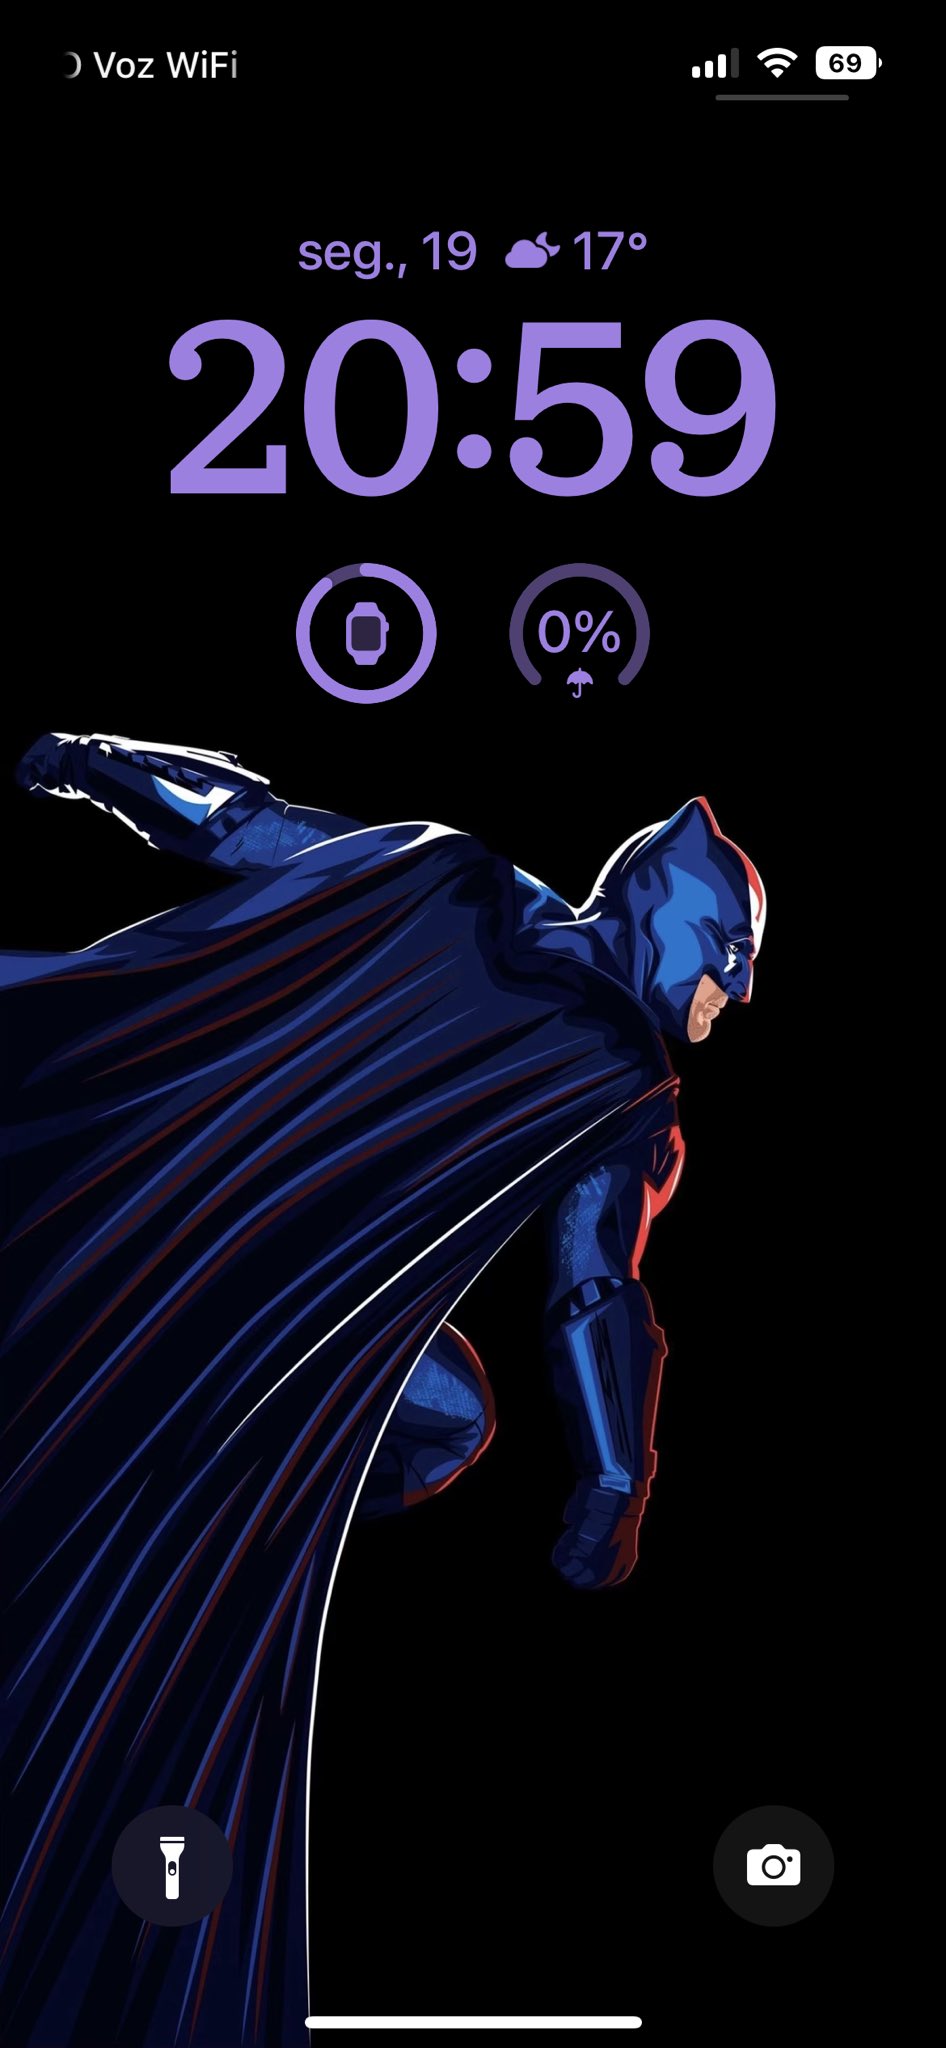 The Batman vs Superman iPhone Wallpaper  iPhone Wallpapers  iPhone  Wallpapers